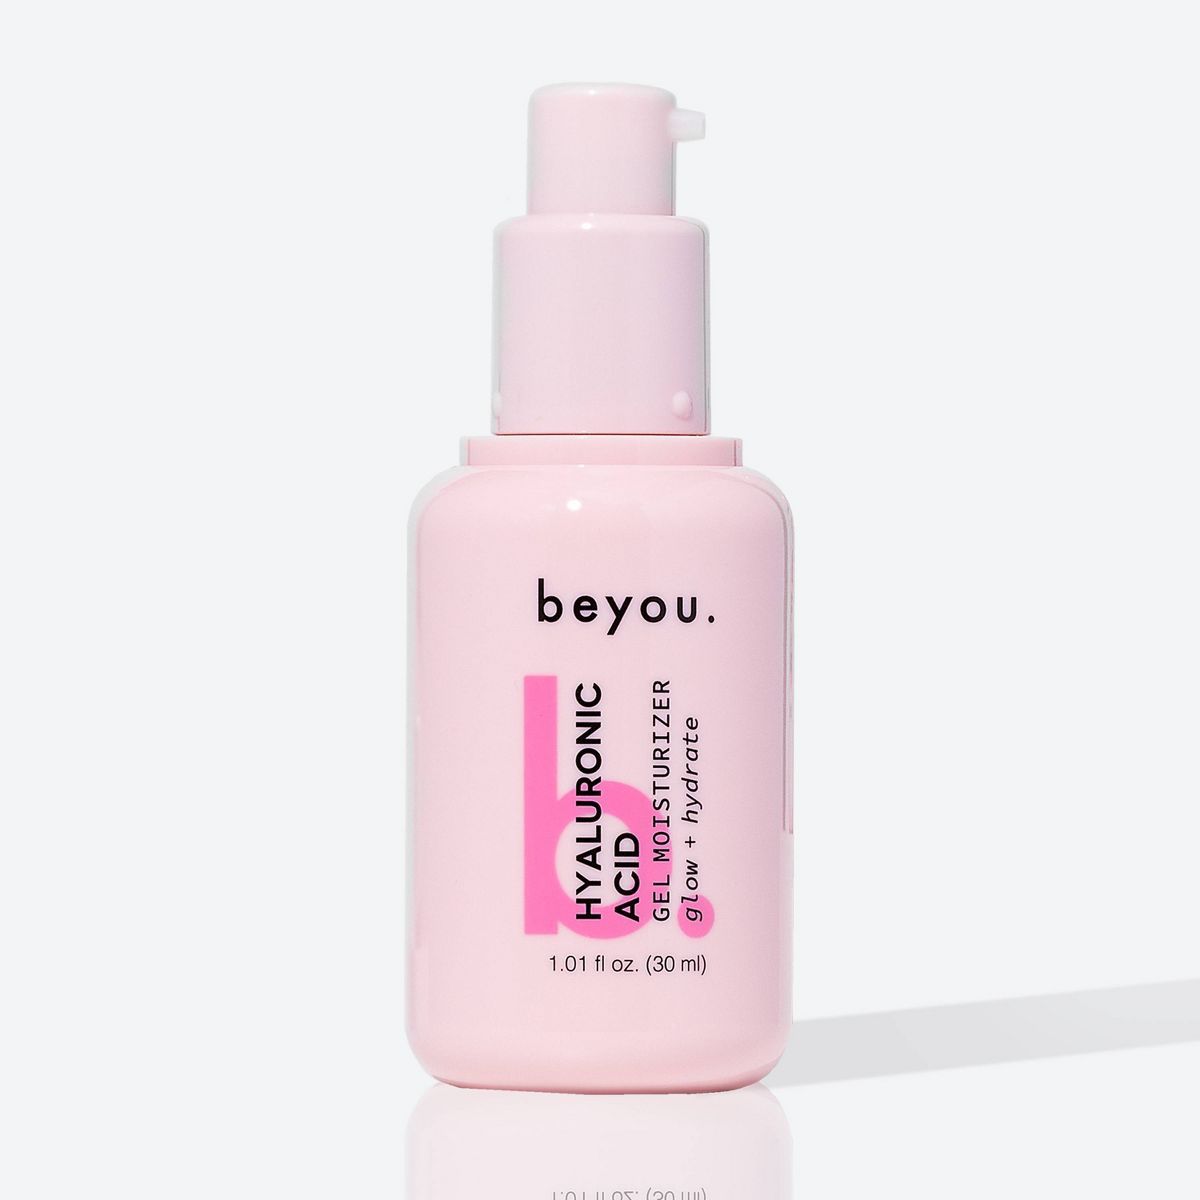 Beyou. Skin Booster Hyaluronic Acid Oil-Free Gel Moisturizer + Sensitive Skin Friendly - 1.01 fl ... | Target